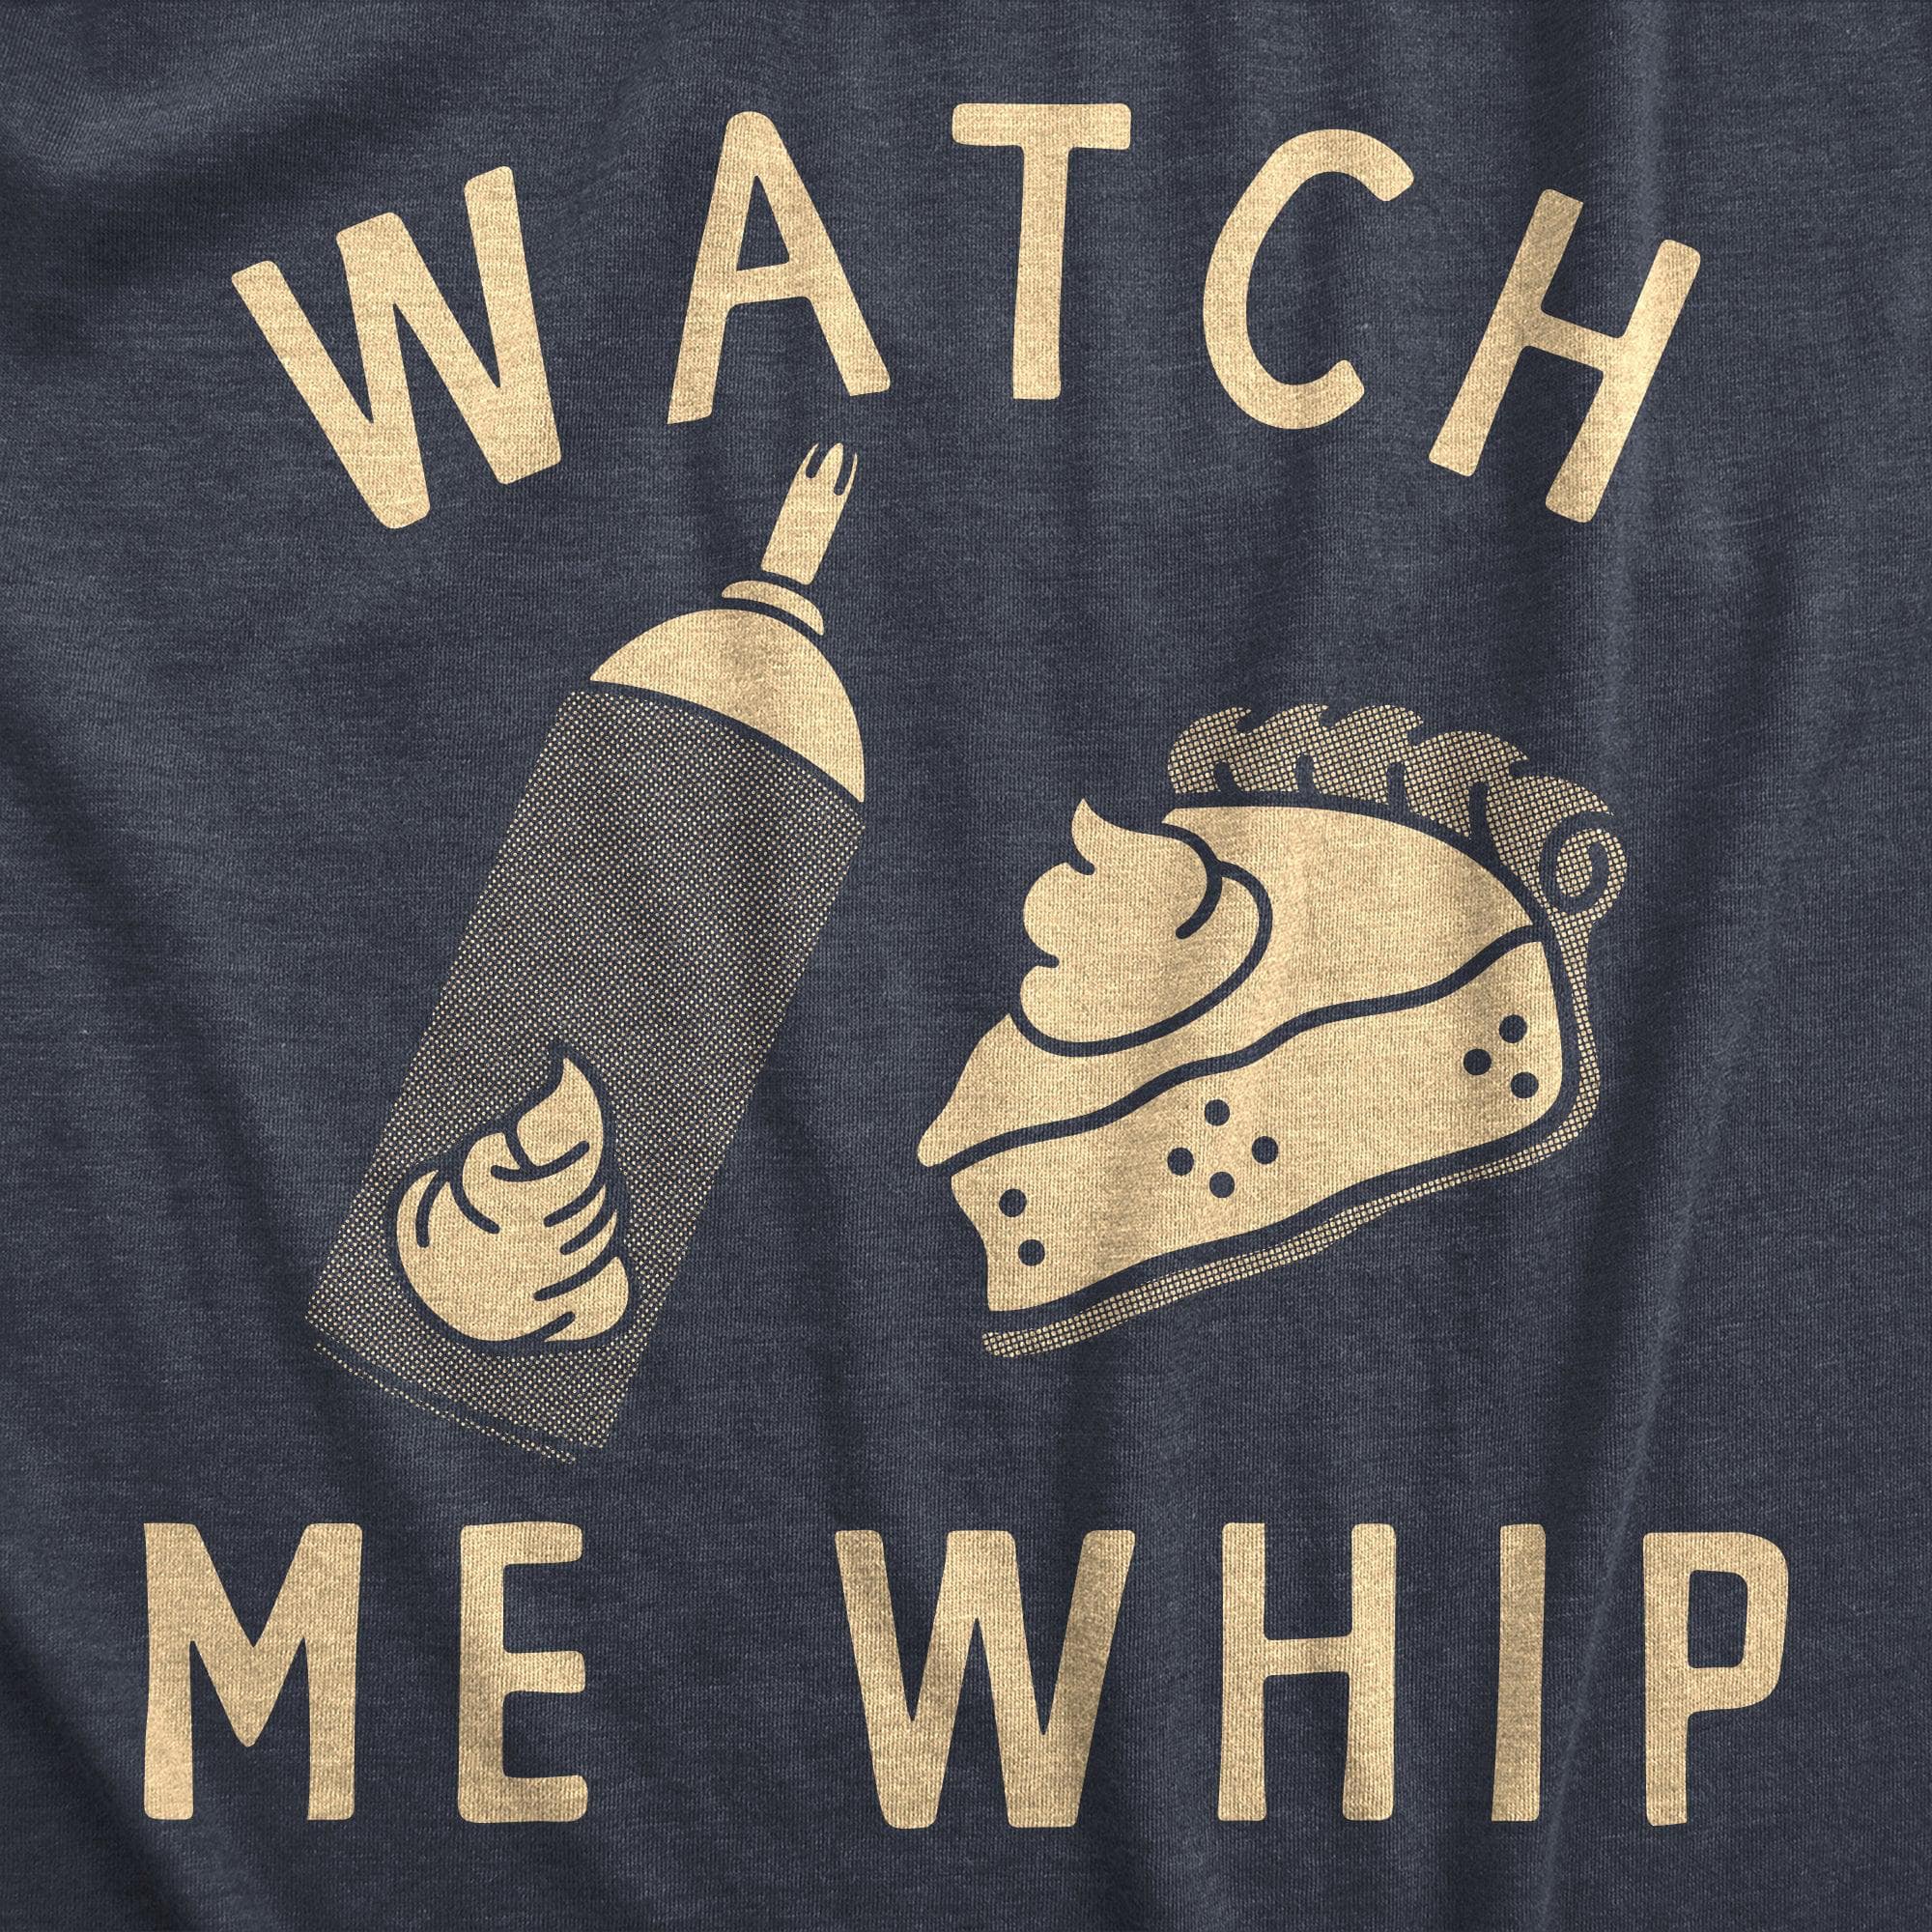 Watch Me Whip Men's Tshirt  -  Crazy Dog T-Shirts